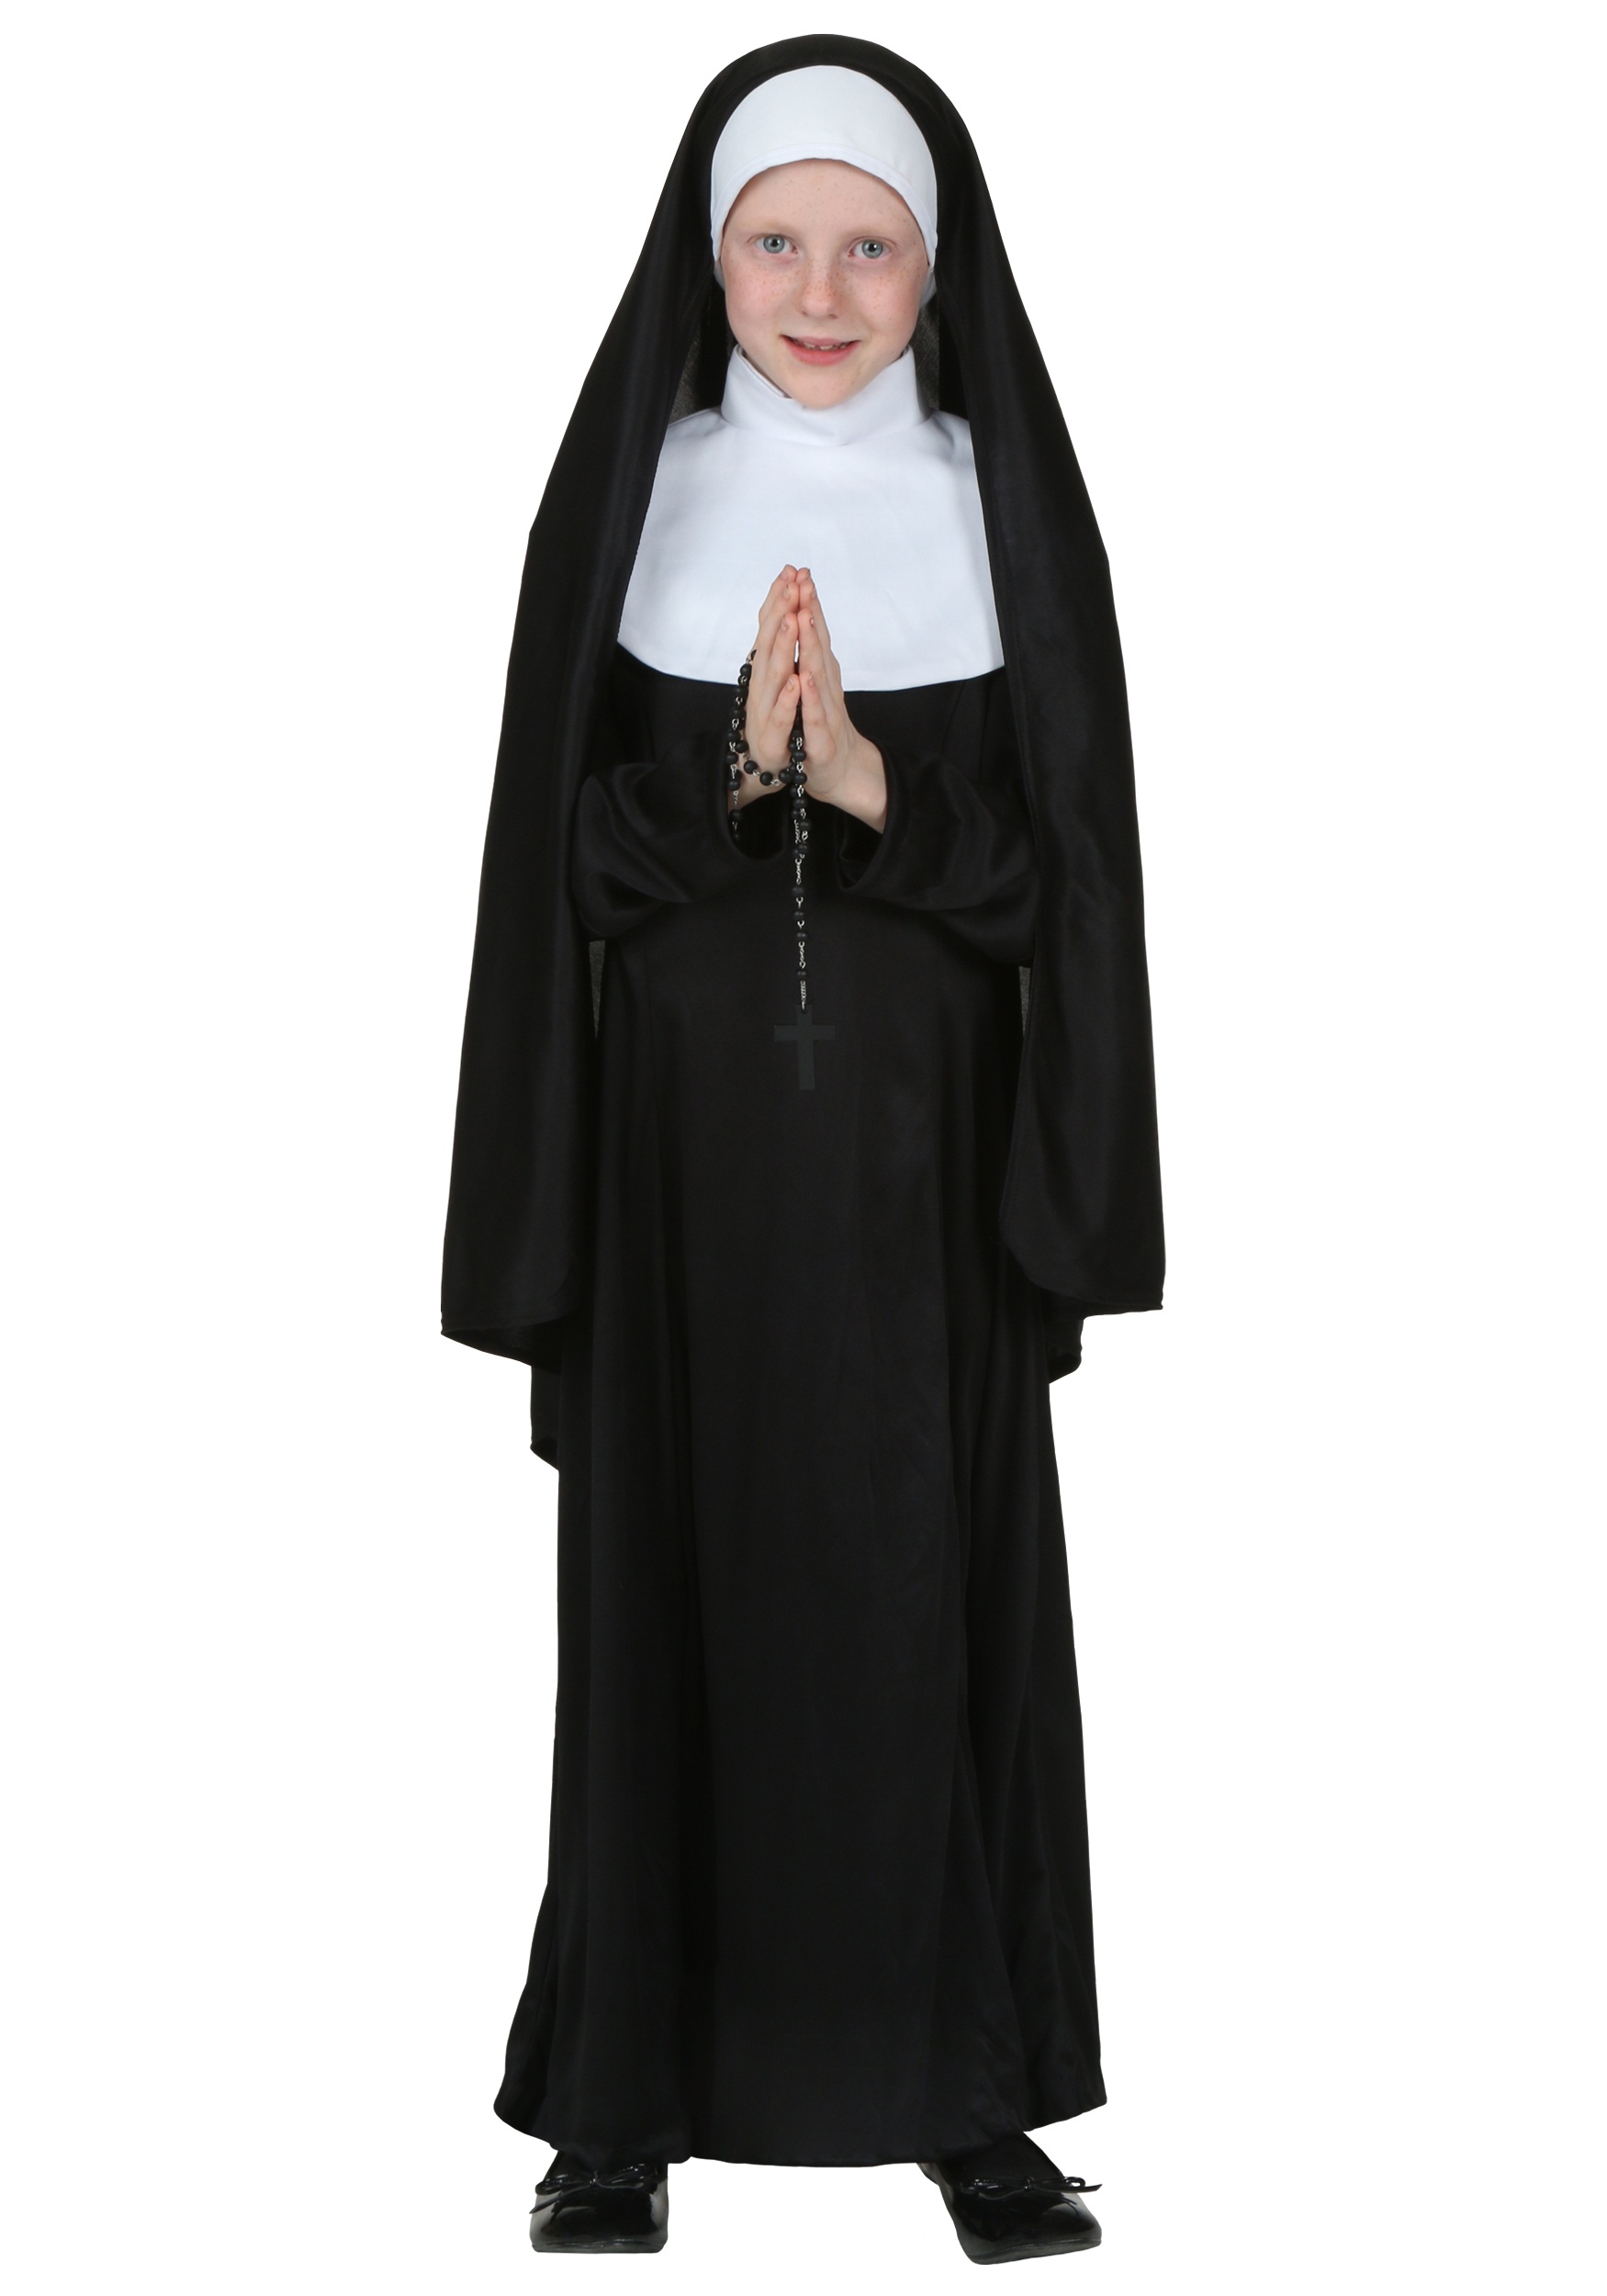 nuns dress